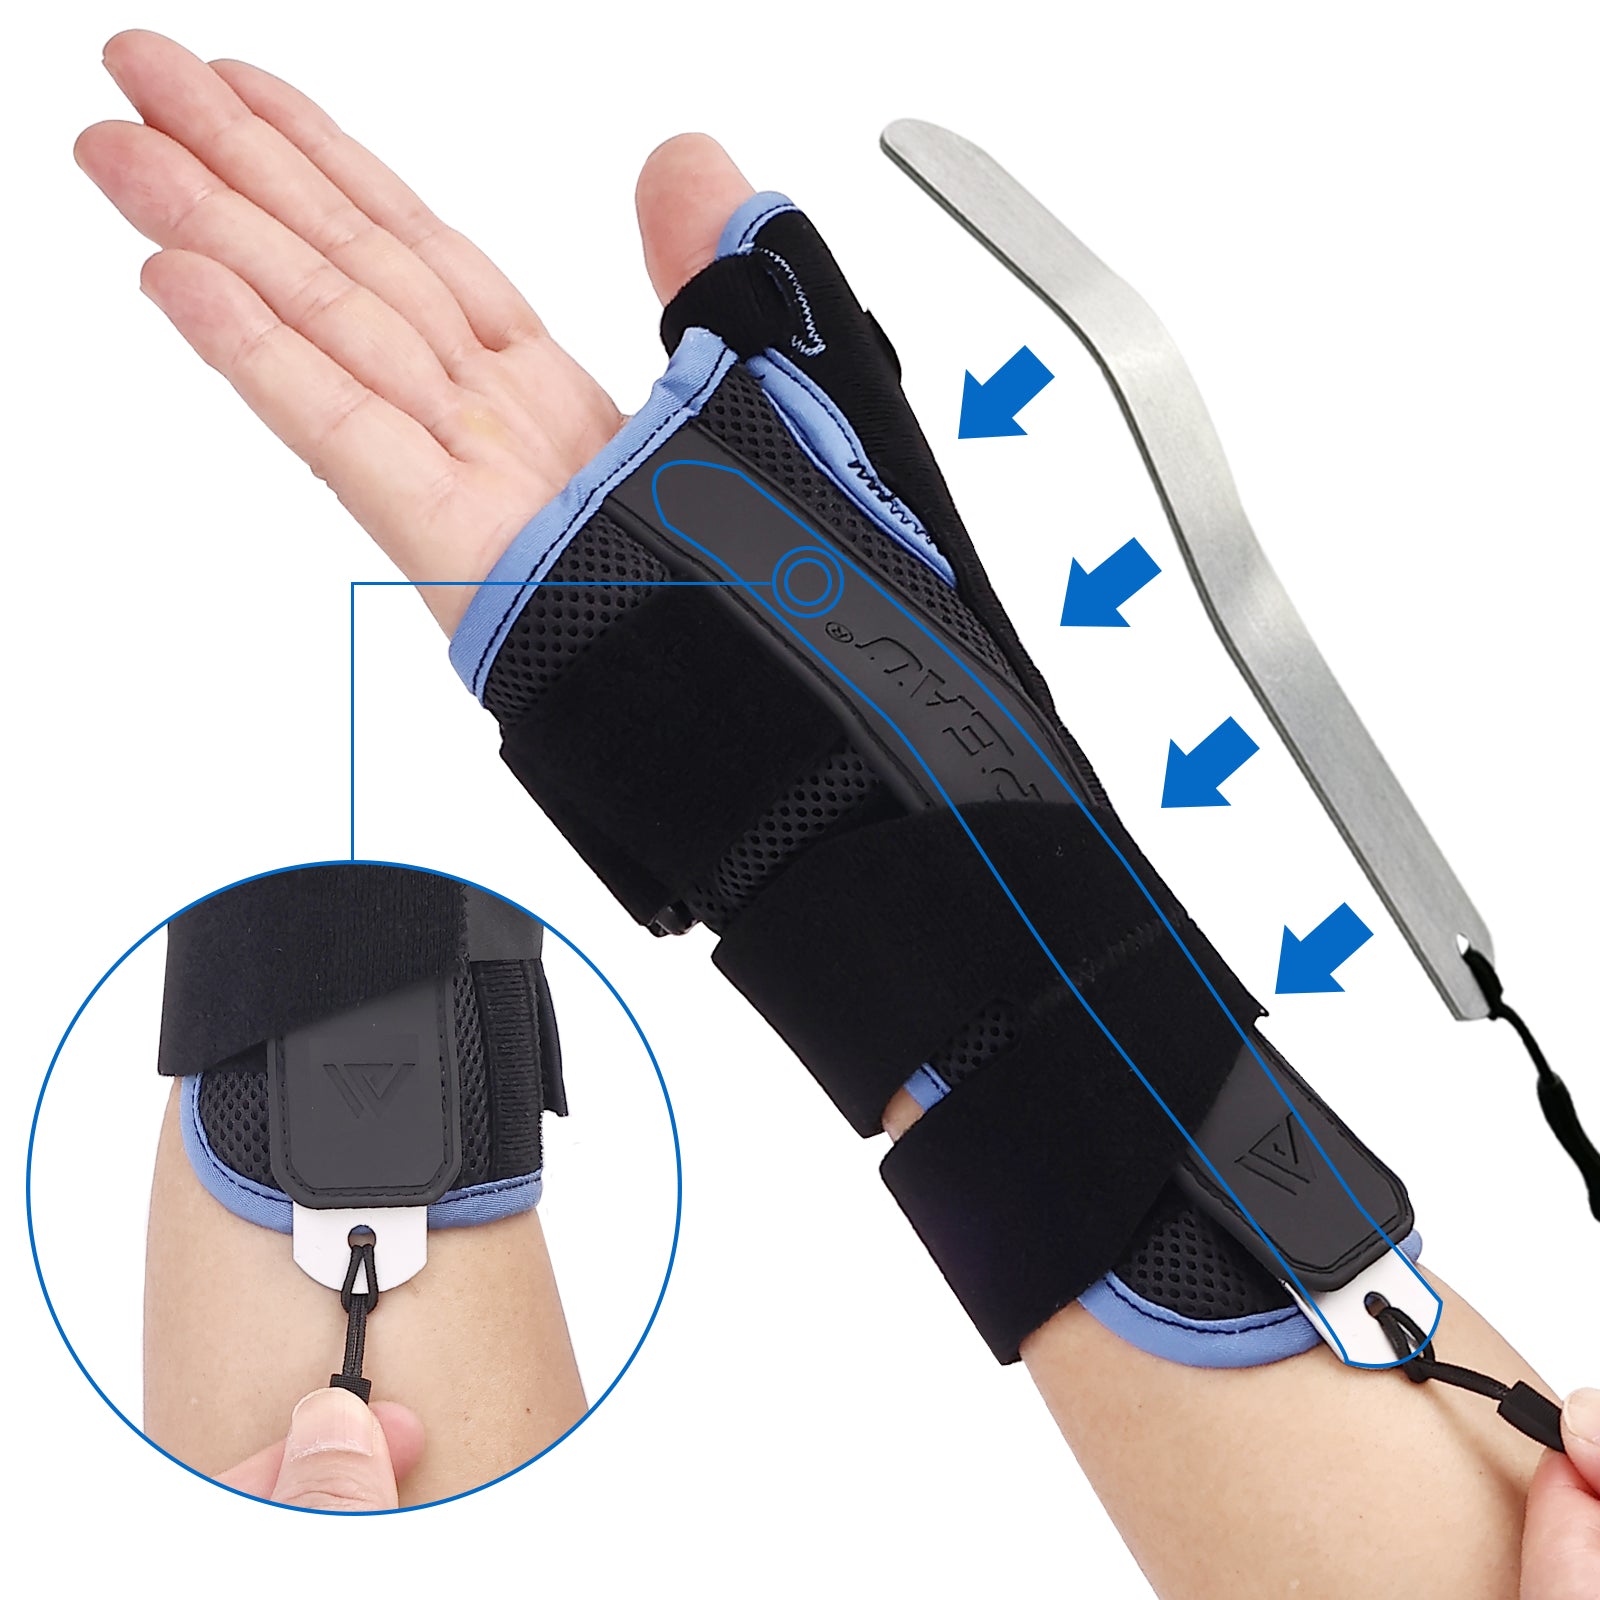 VP0906 VELPEAU Thumb Wrist Brace Breathable Version